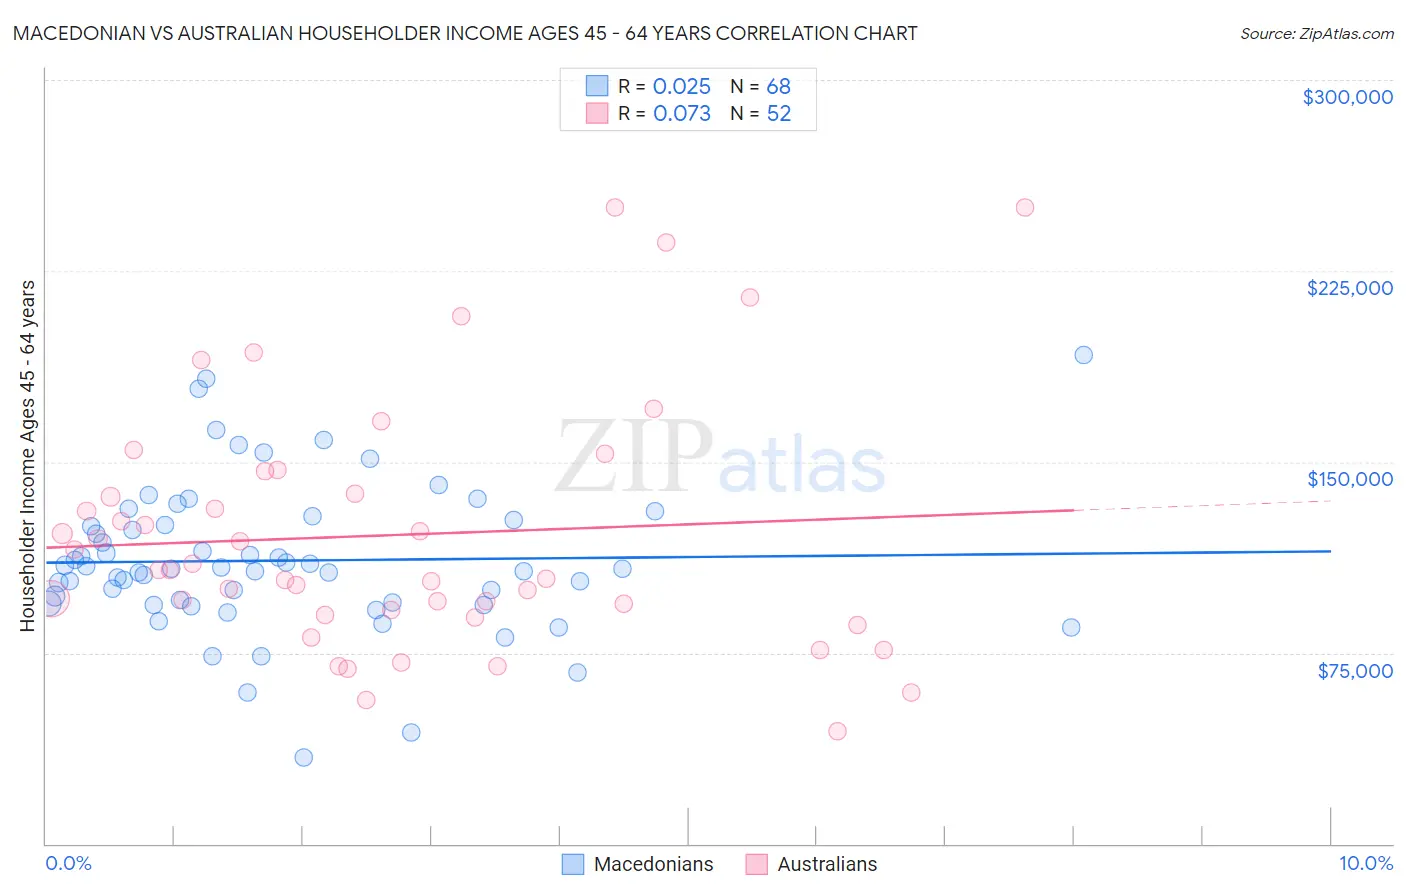 Macedonian vs Australian Householder Income Ages 45 - 64 years